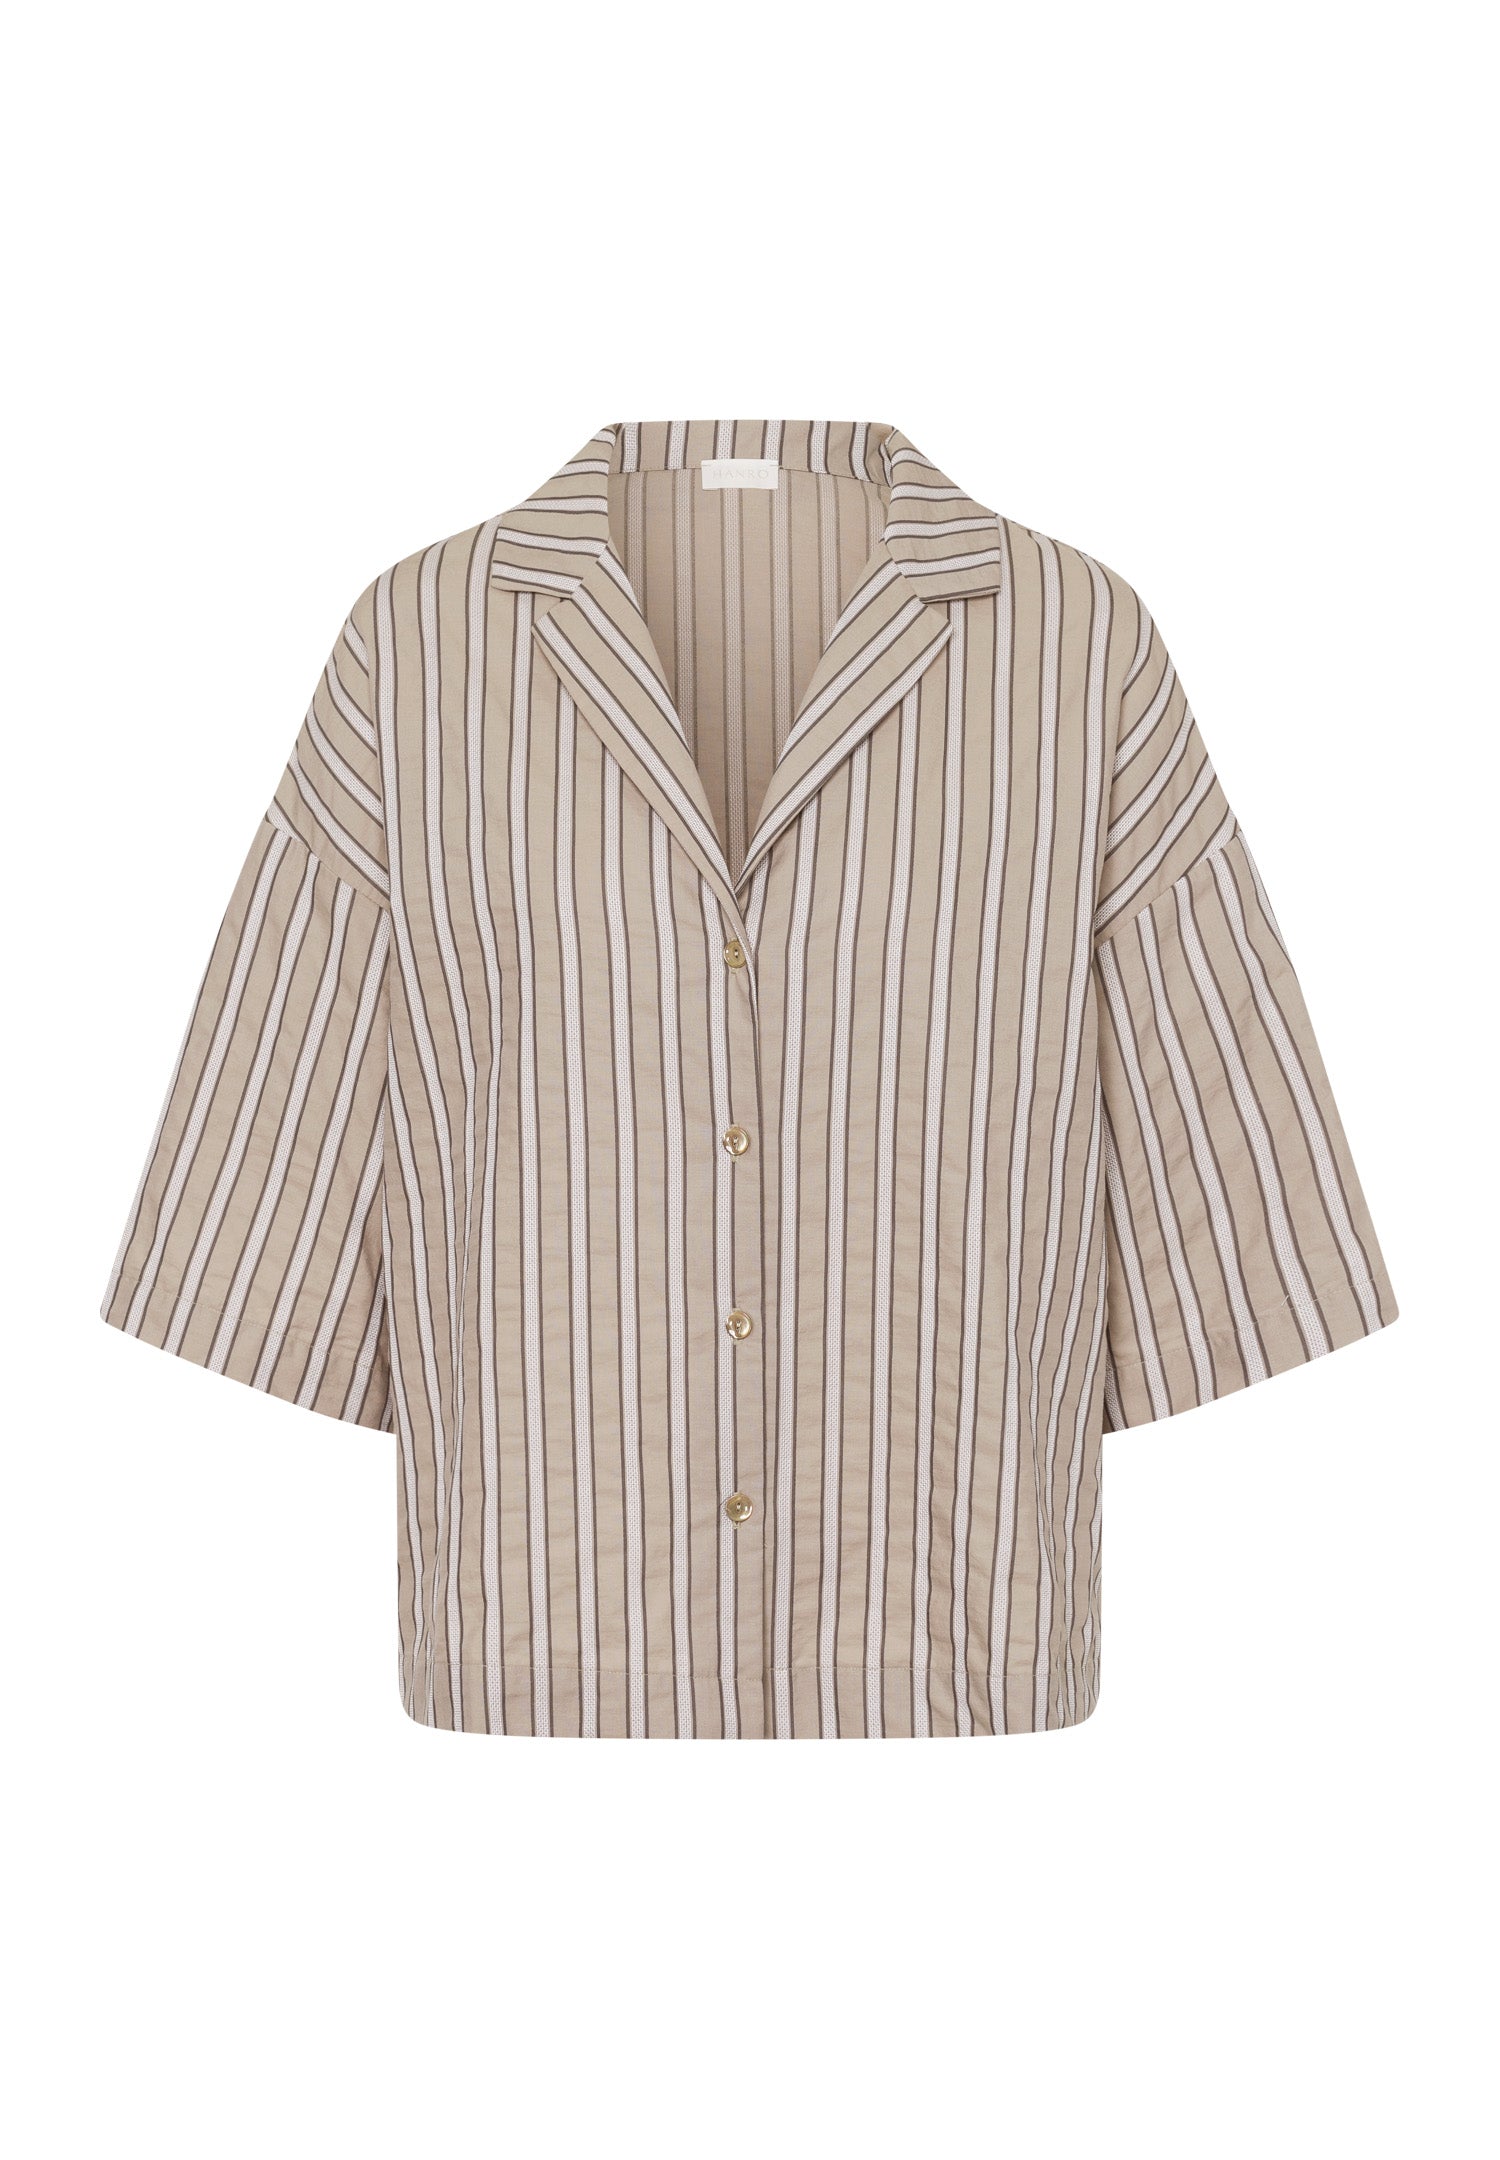 78708 Urban Casuals Short Sleeve Shirt - 2370 Earthy Stripe